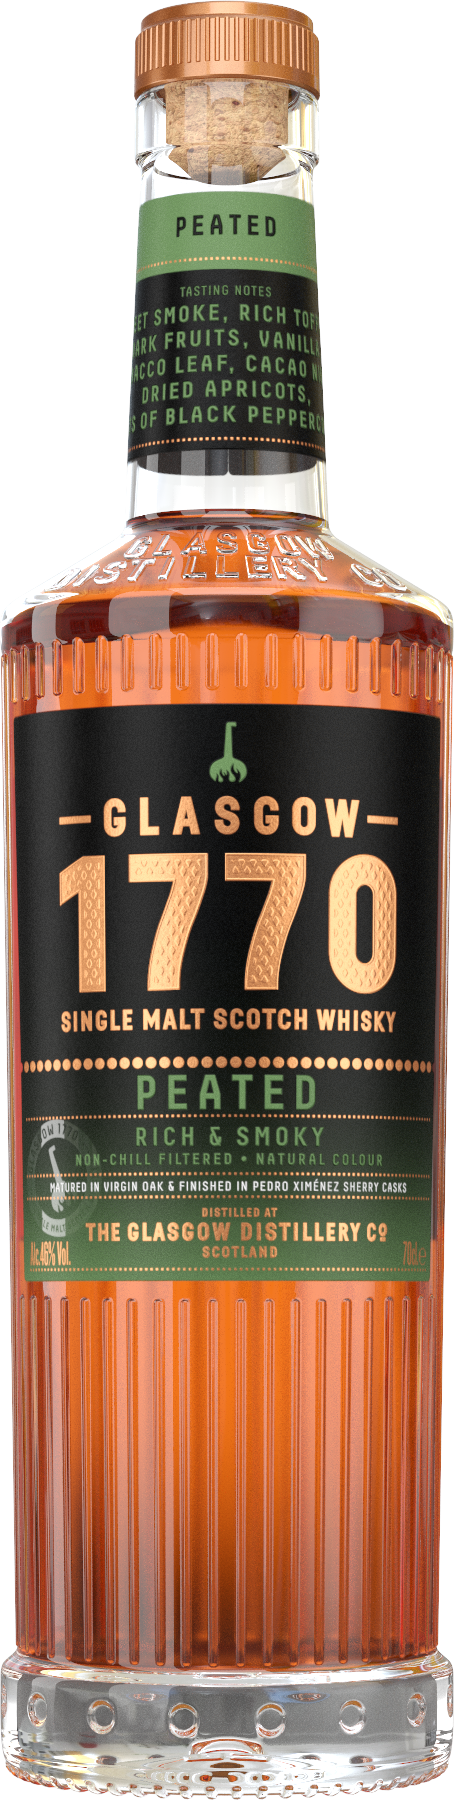 Glasgow 1770 Peated Rich & Smoky 46% 0,7l